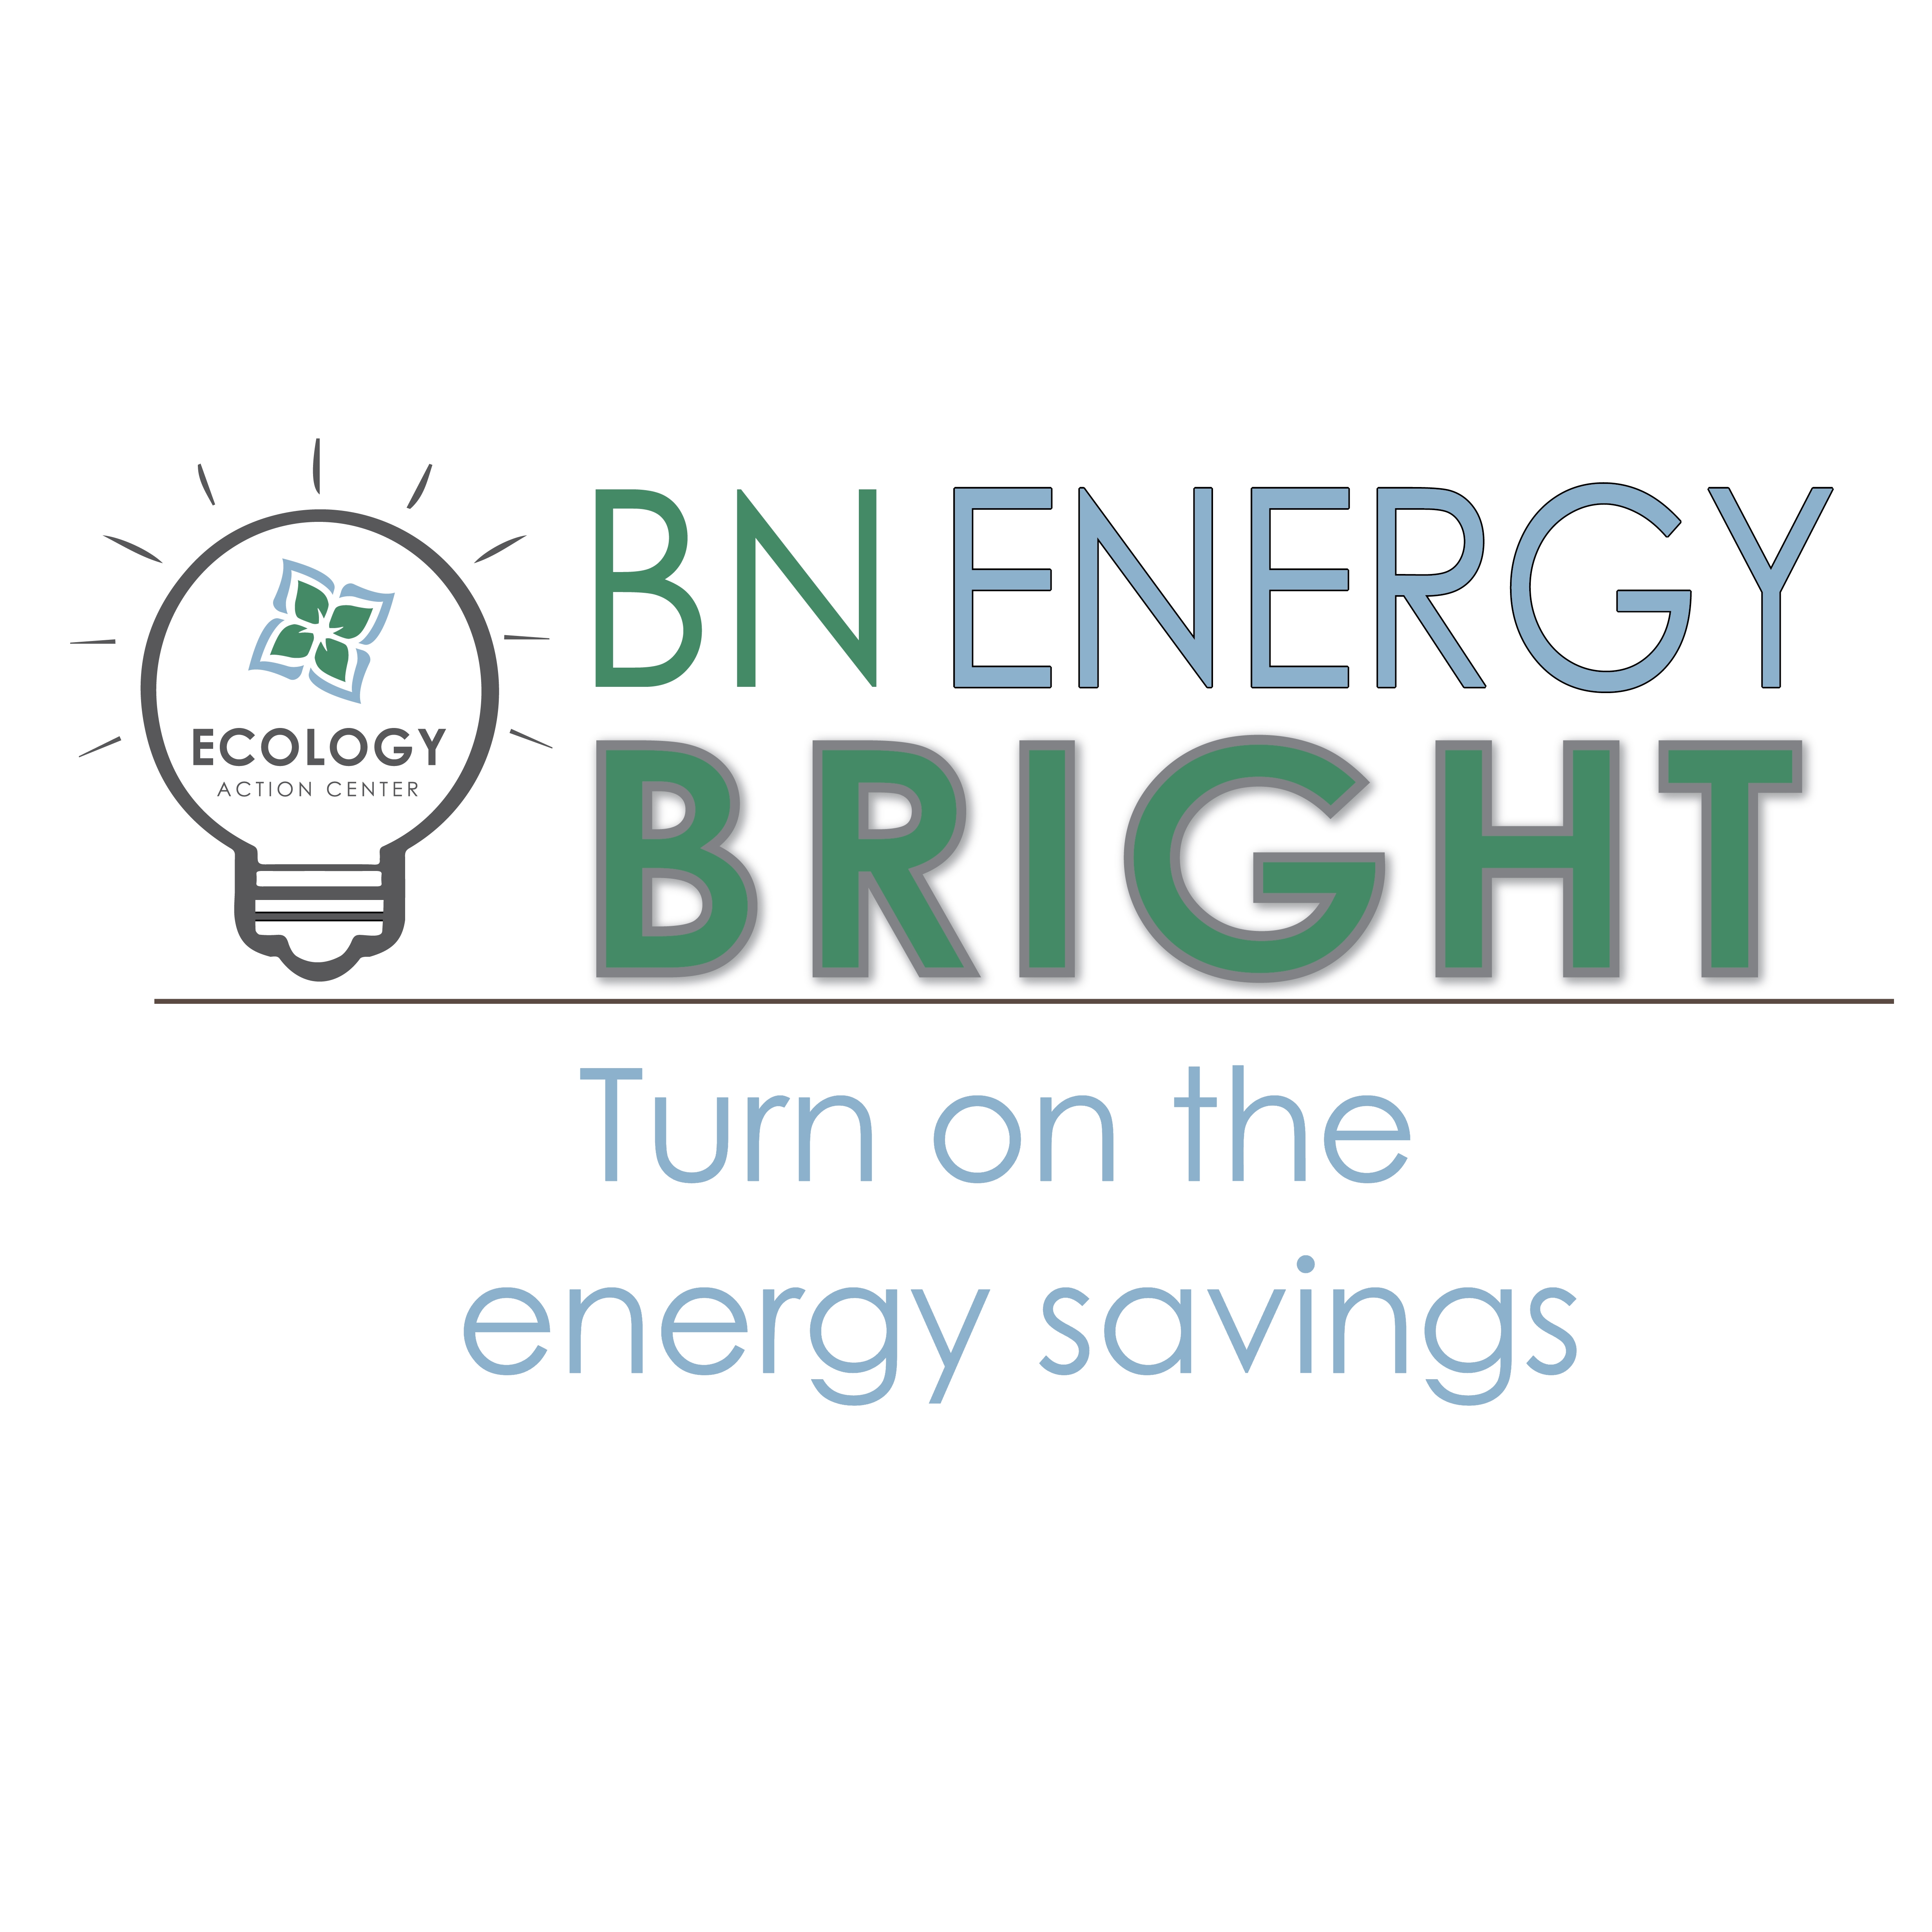 BN Energy Bright logo